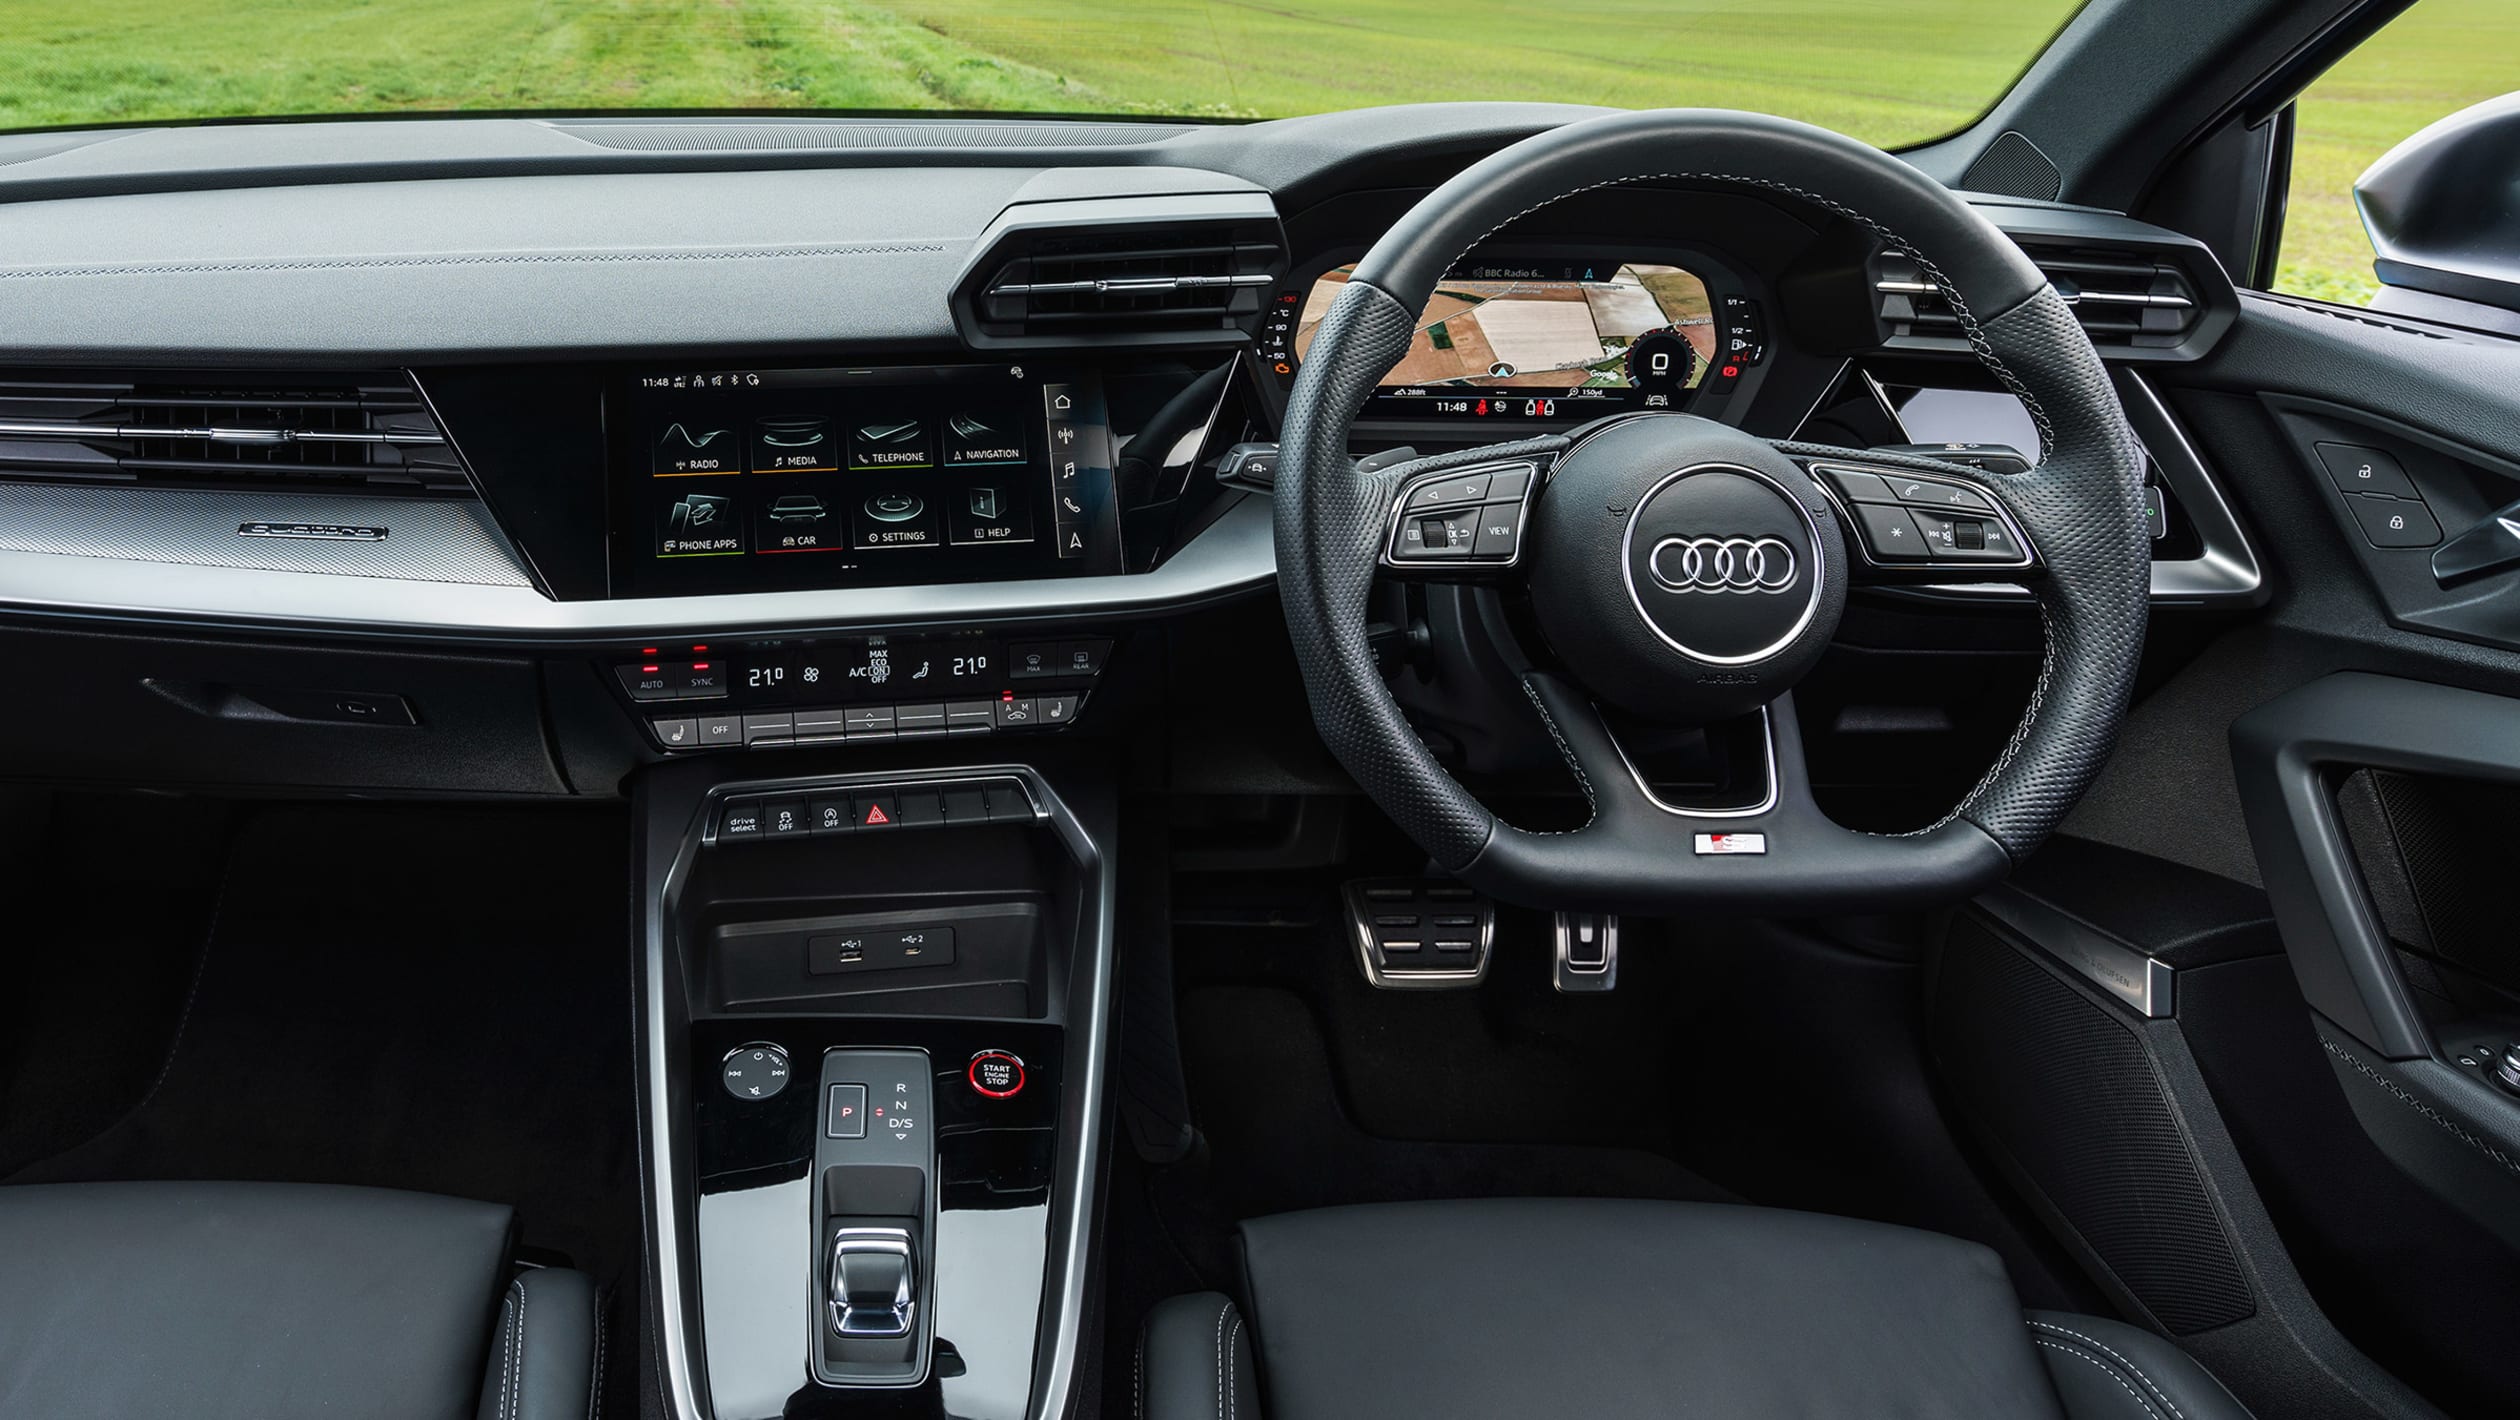 2021 Audi S3 sedan 2020 review - Automotive Daily